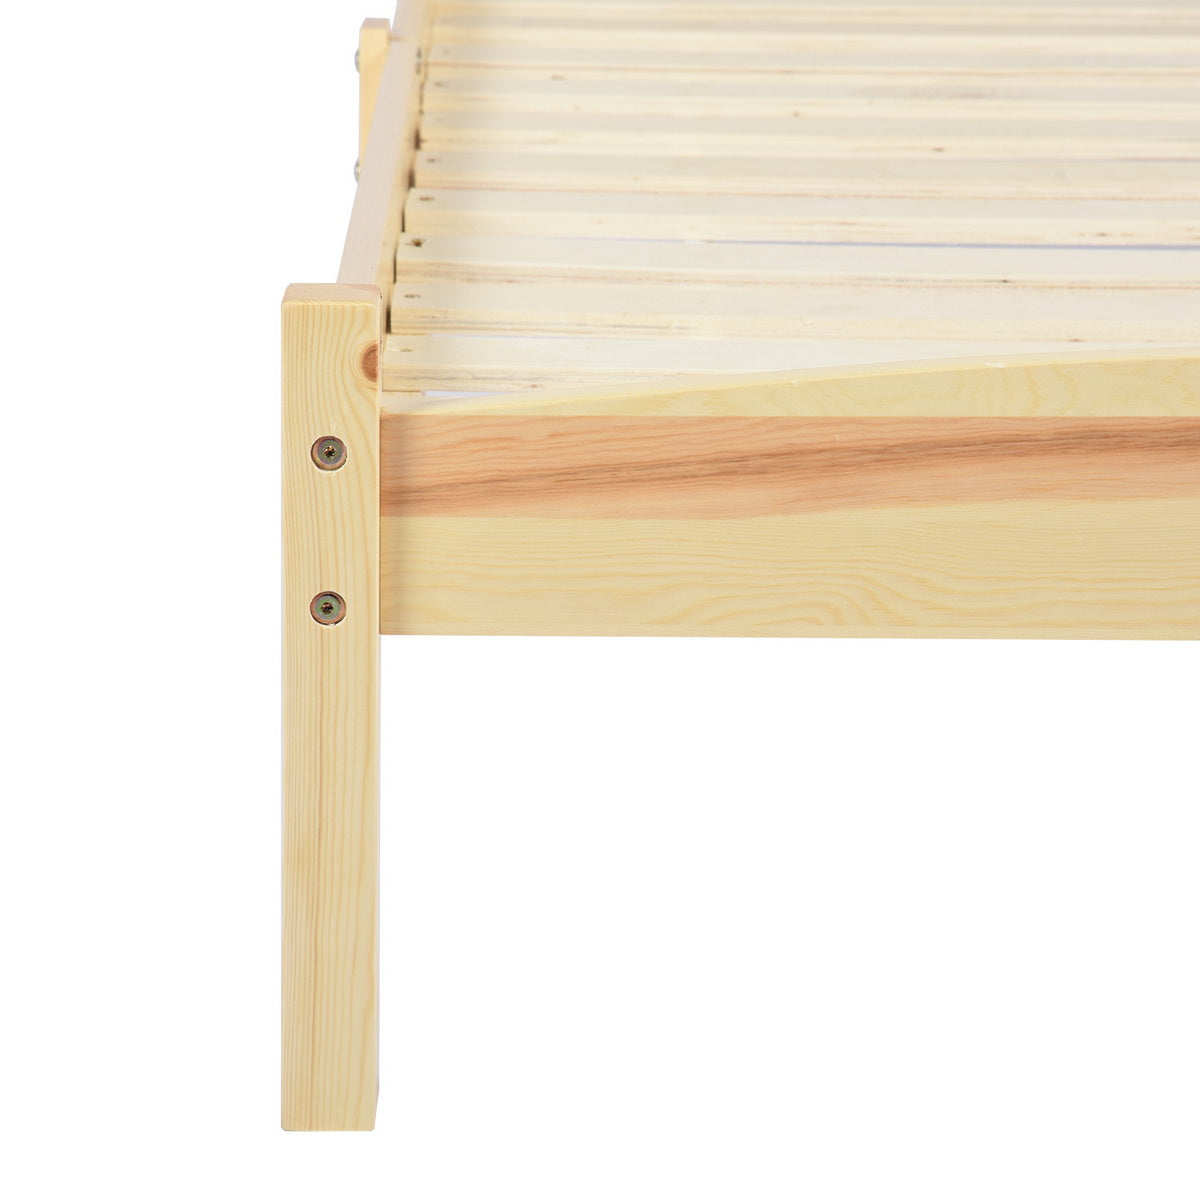 BIGLIA Double Pine Wooden Bed 146*198cm - Wood